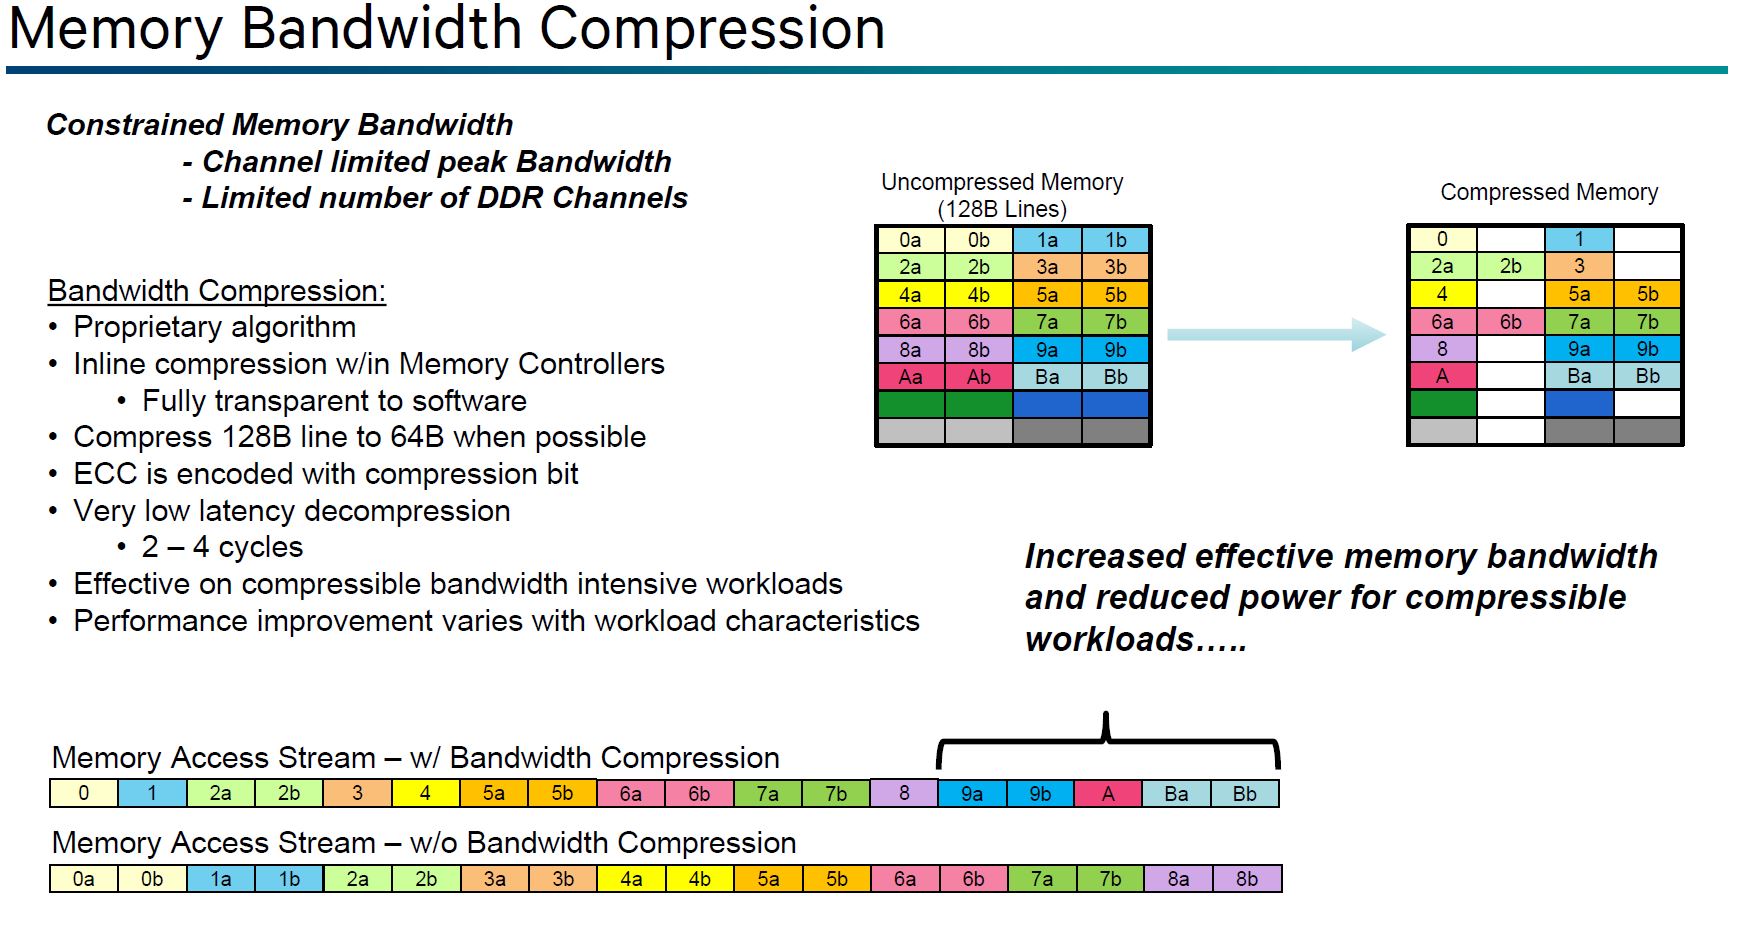 Qualcomm Centriq 2400 Memory Bandwidth Compression